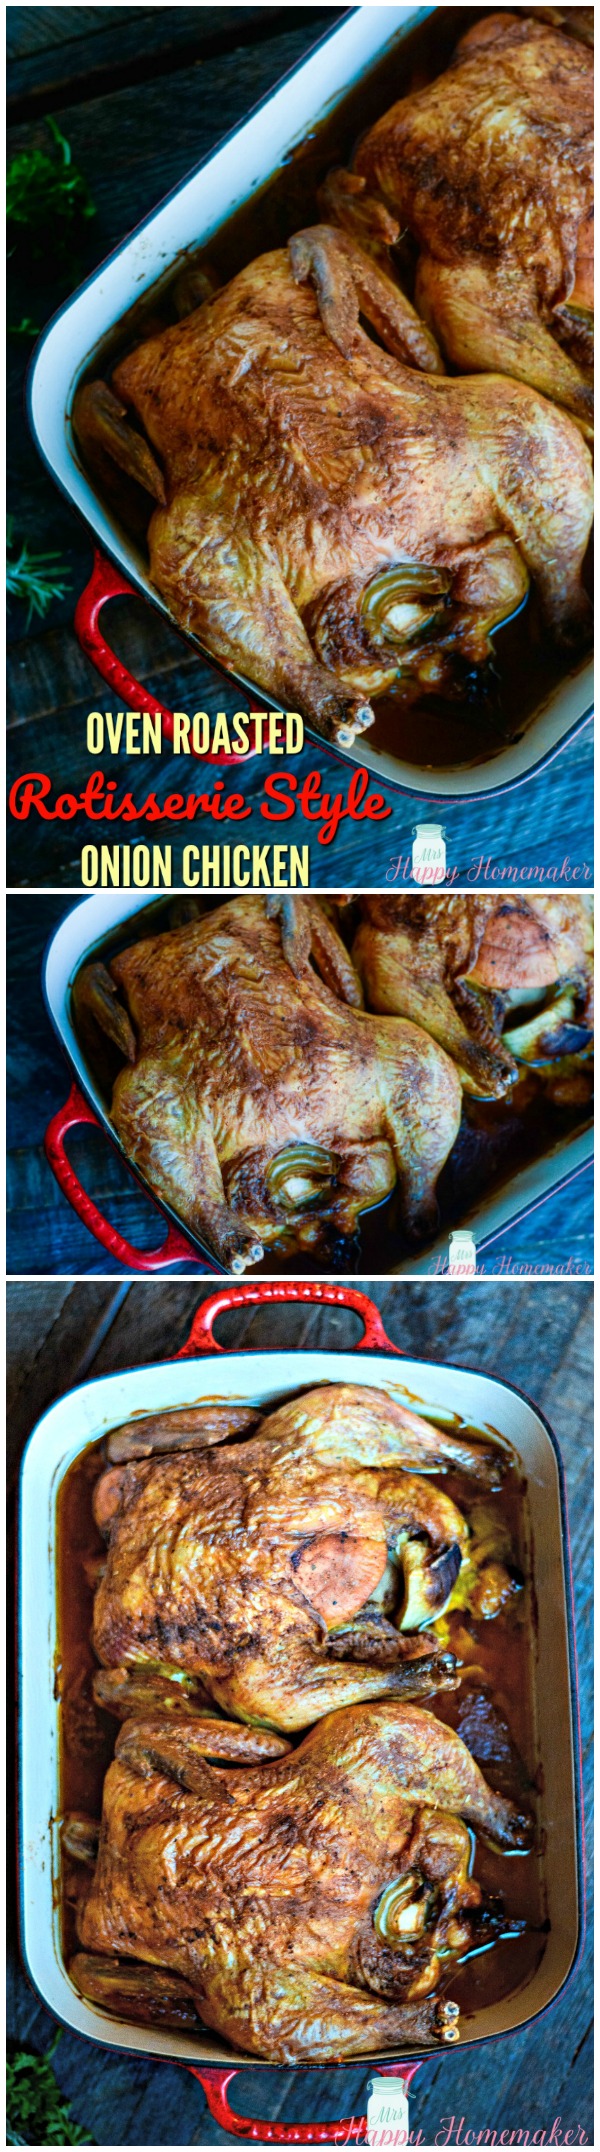 Oven Roasted Rotisserie Style Onion Chicken | MrsHappyHomemaker.com @MrsHappyHomemaker